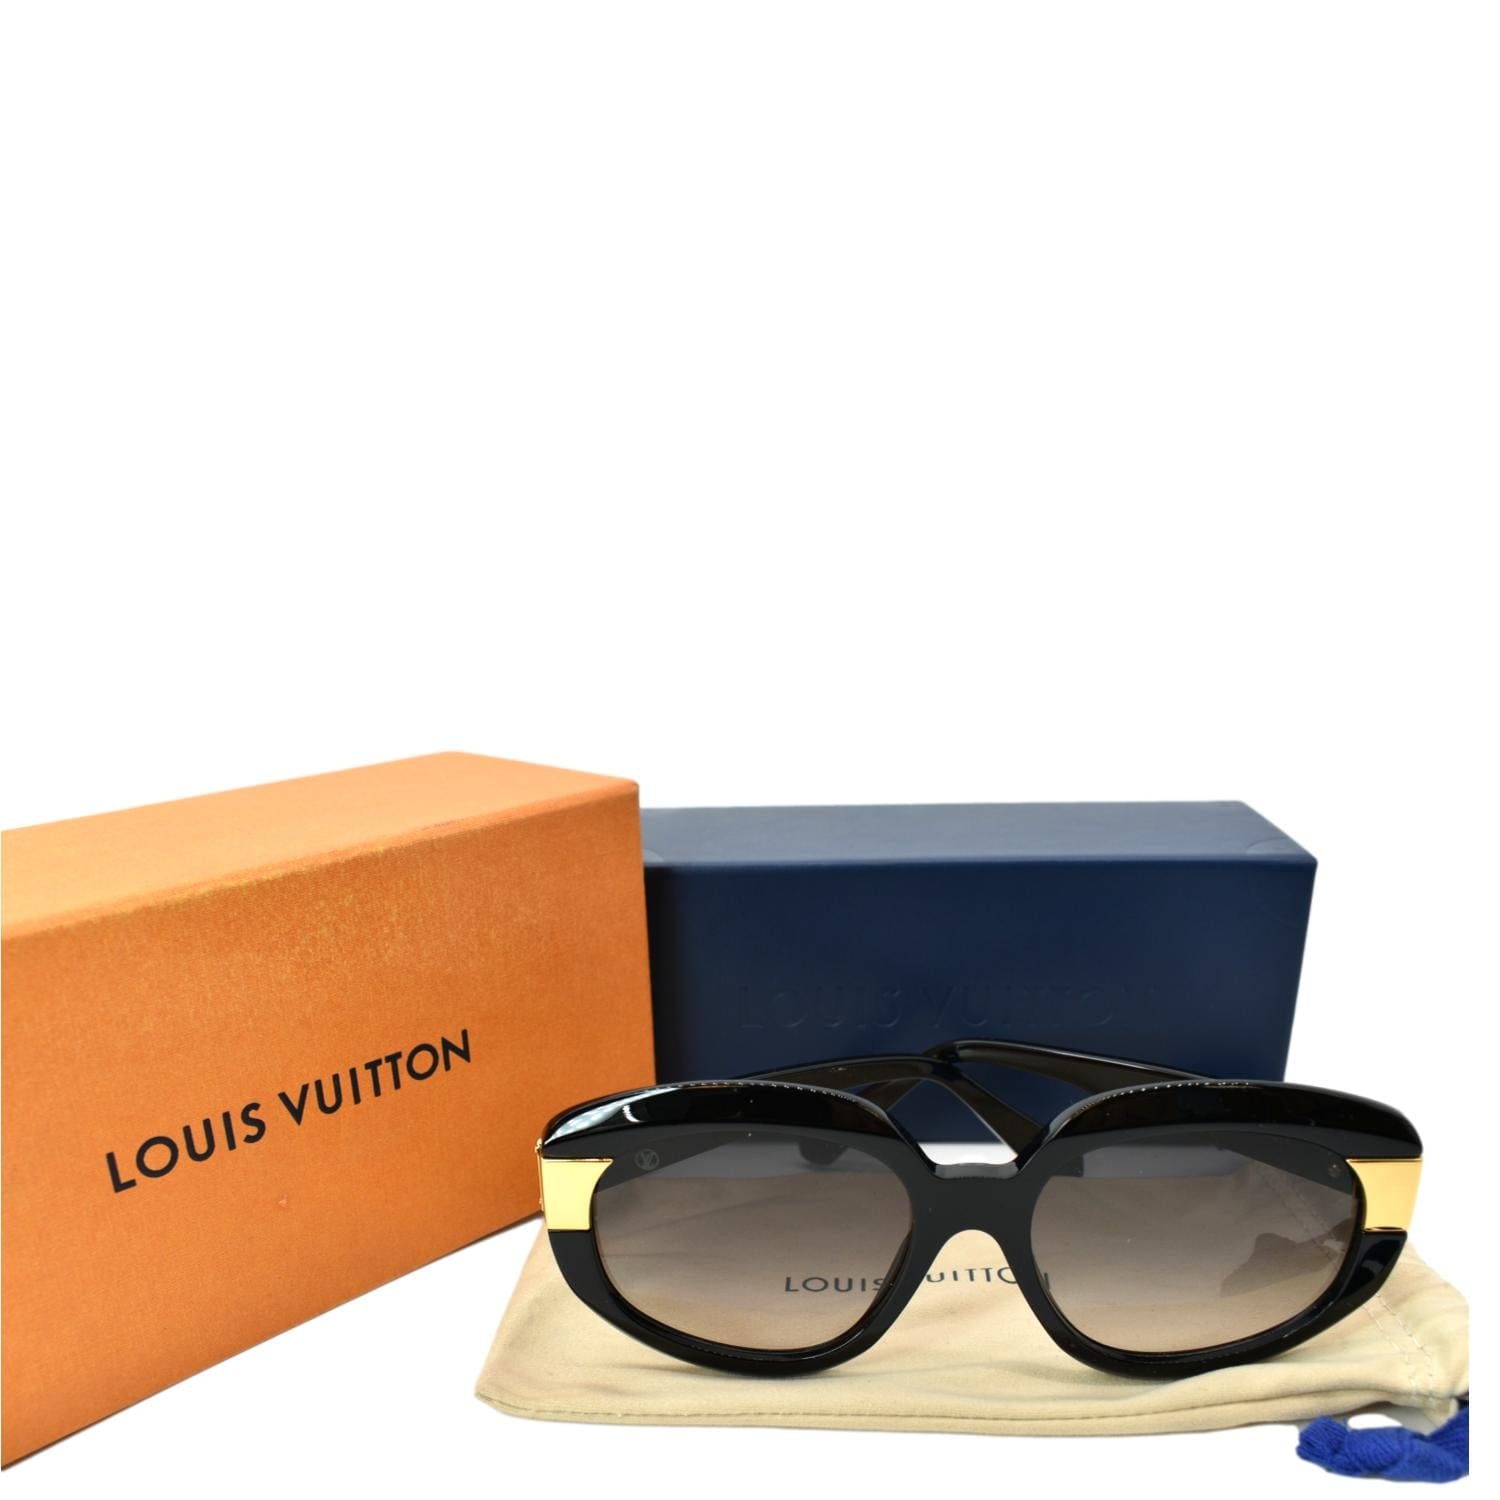 Original Louis Vuitton Sunglasses! 😍 #louisvuitton #richlife #lifest